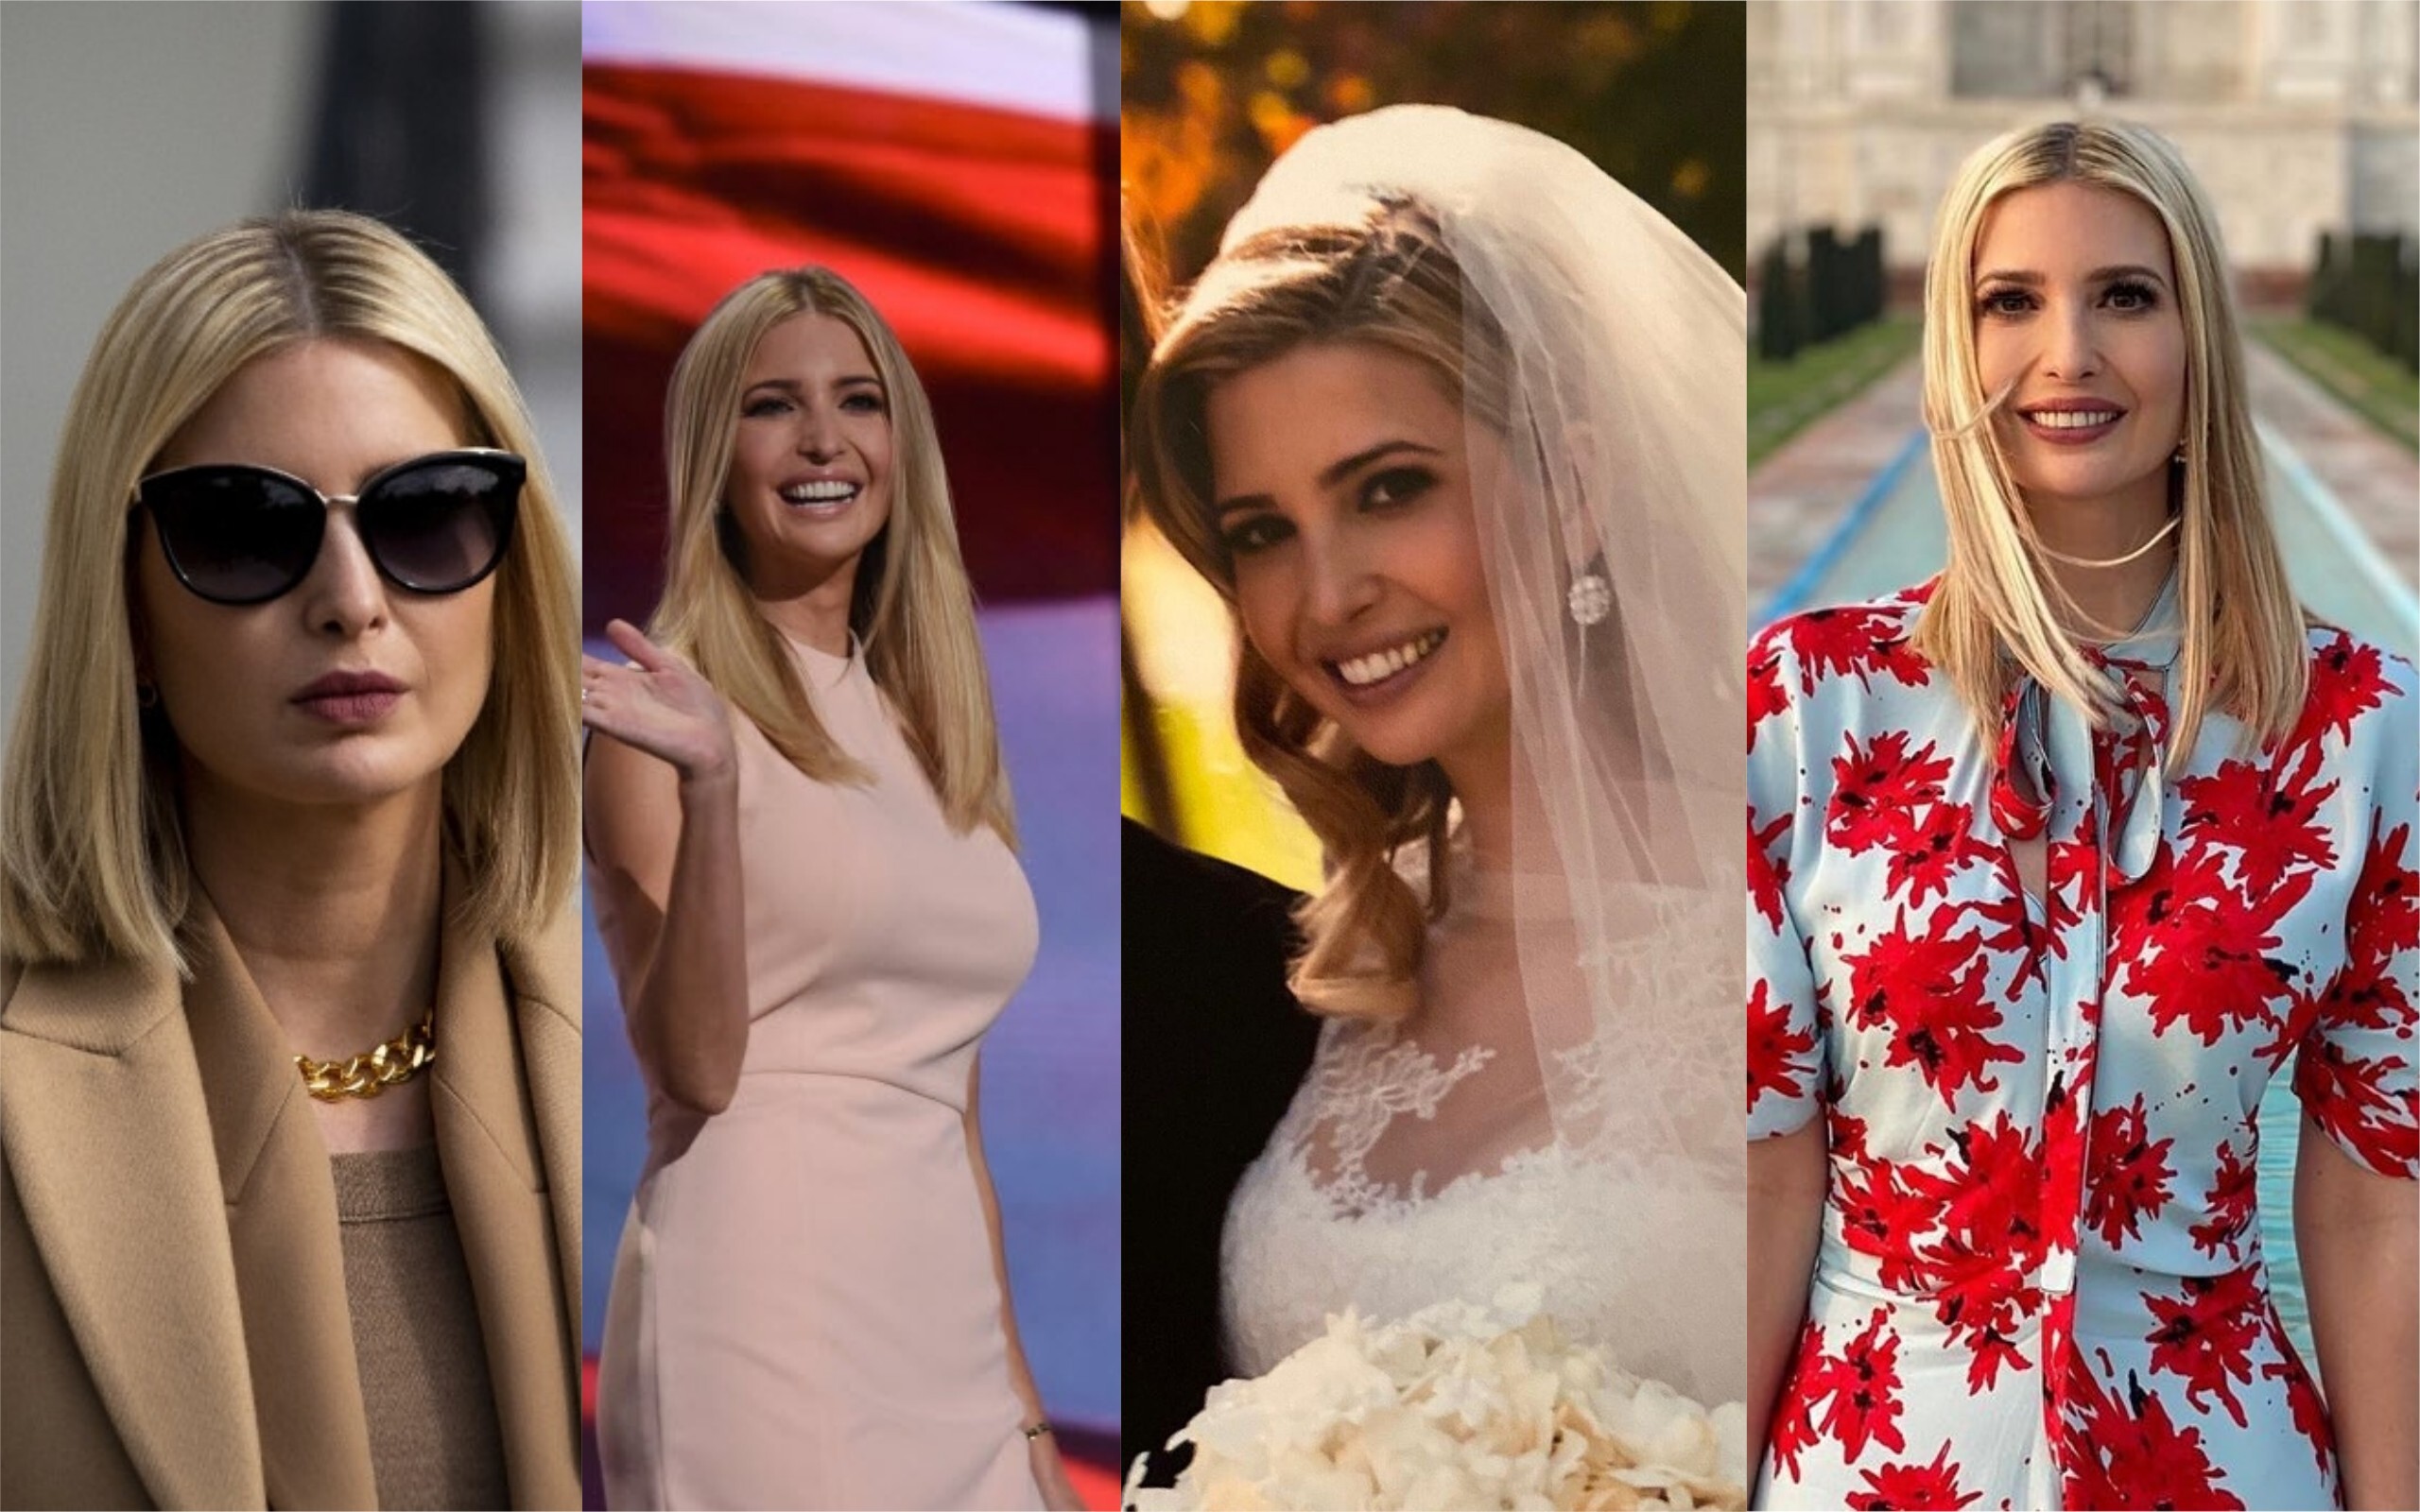 The many looks of Ivanka Trump. Photos (left to right): Al Drago/Bloomberg, Xinhua, @ivankatrump/Instagram